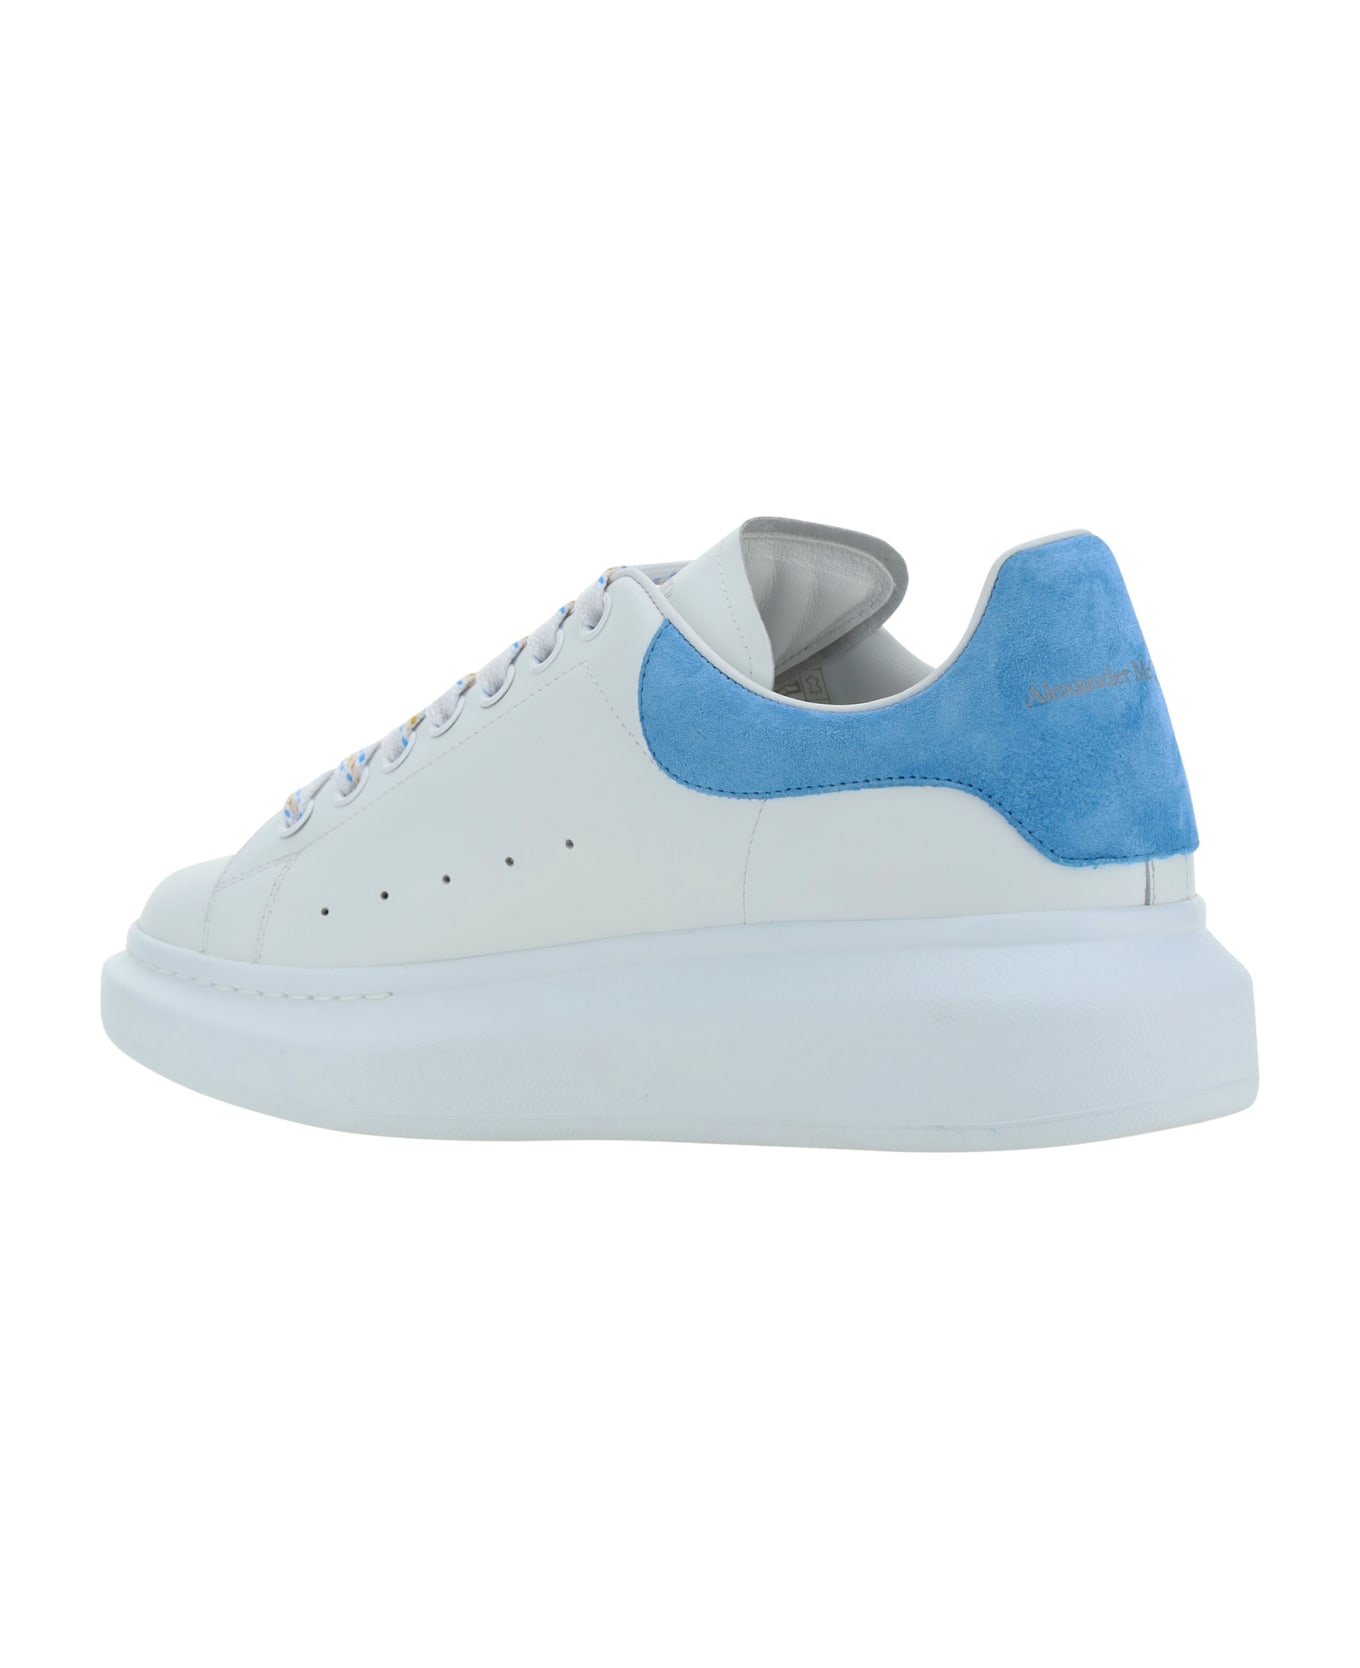 Alexander McQueen Sneakers - White/light blue